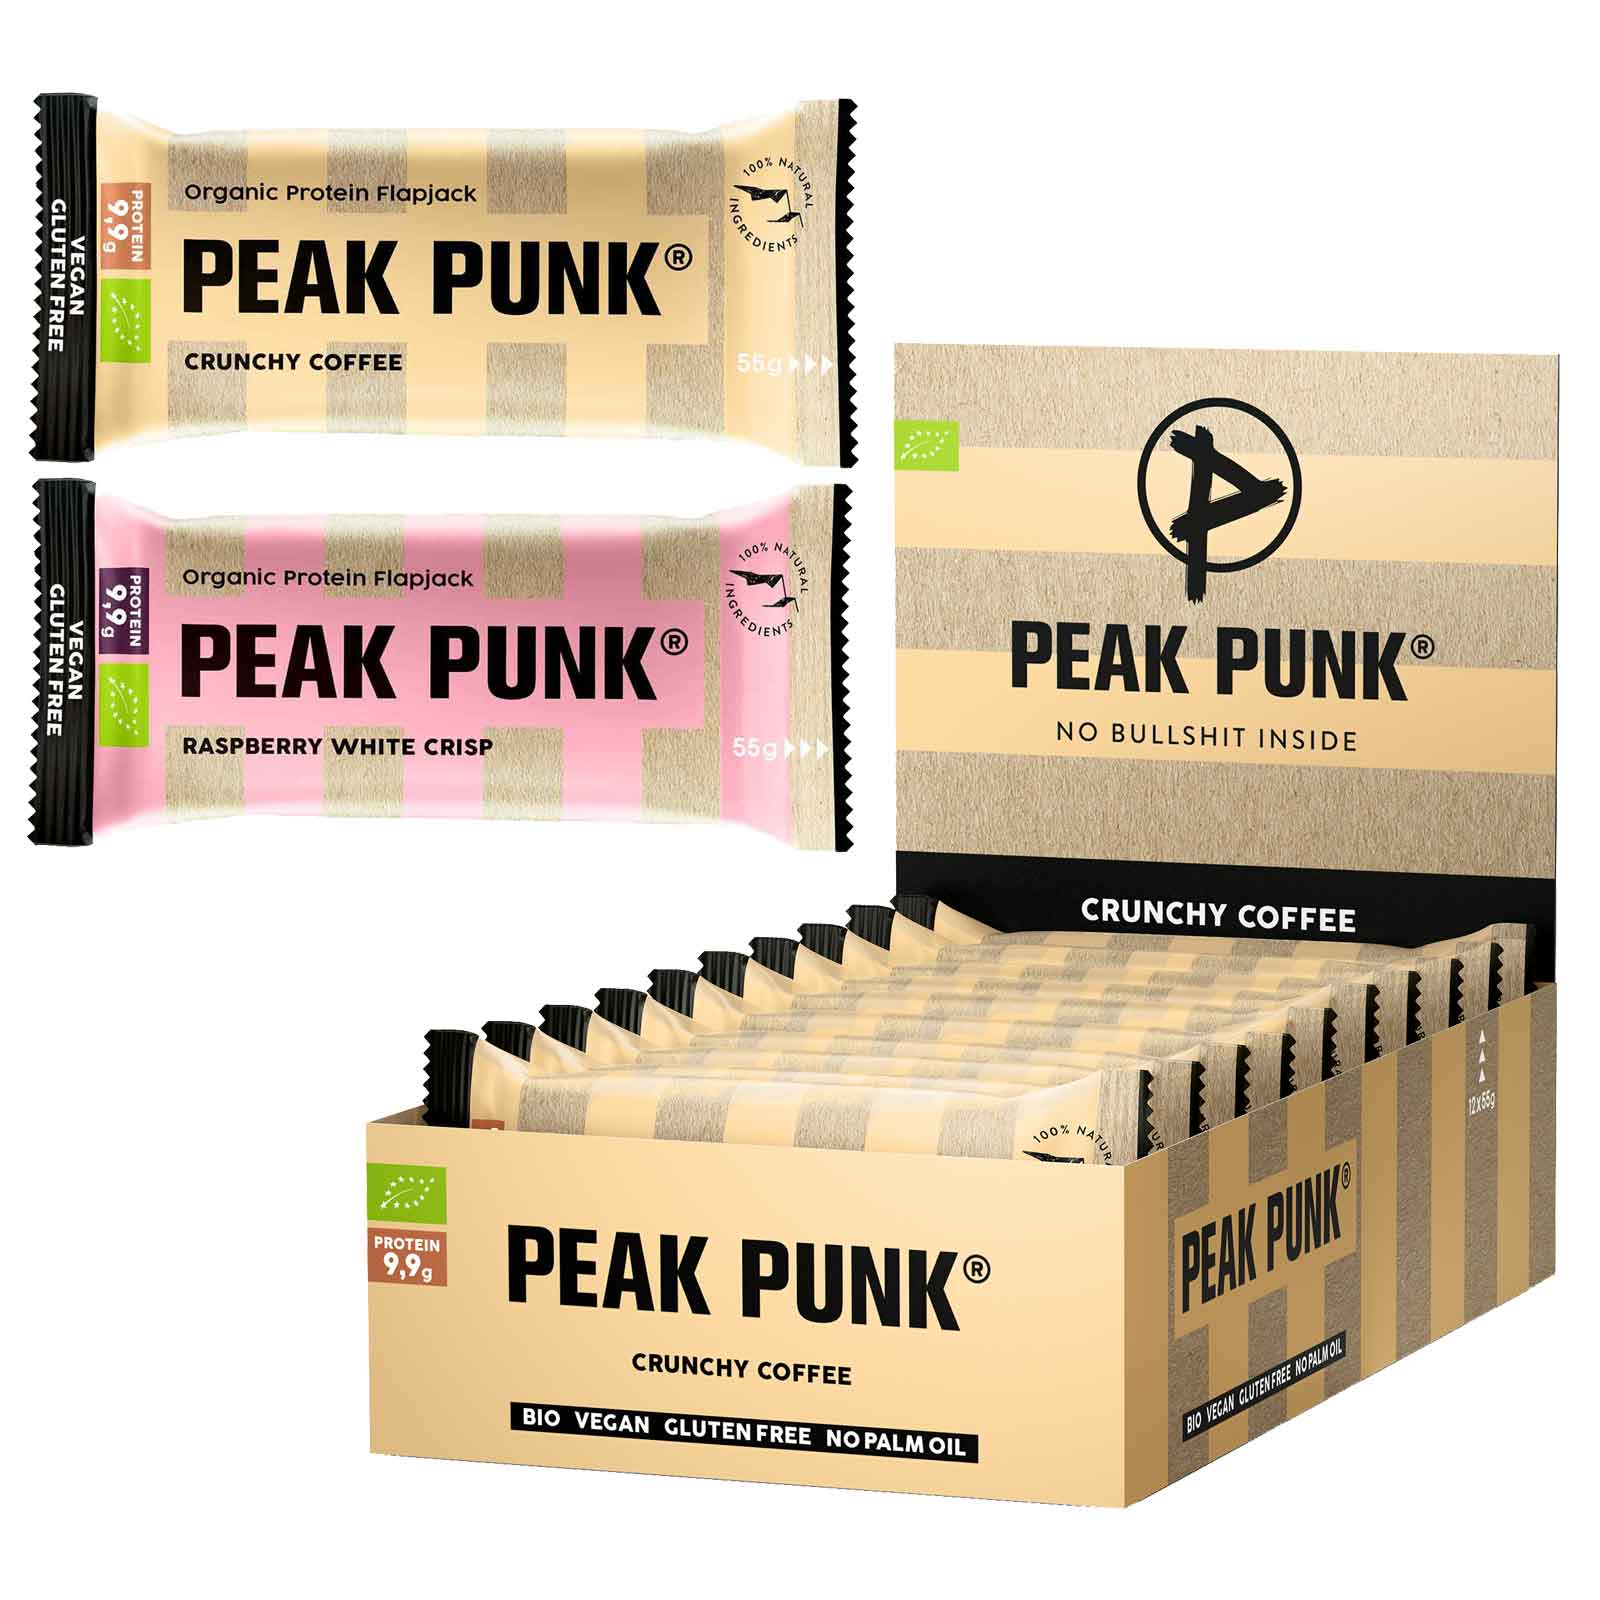 Picture of Peak Punk ORGANIC Protein Flapjack Bar - 12x55g